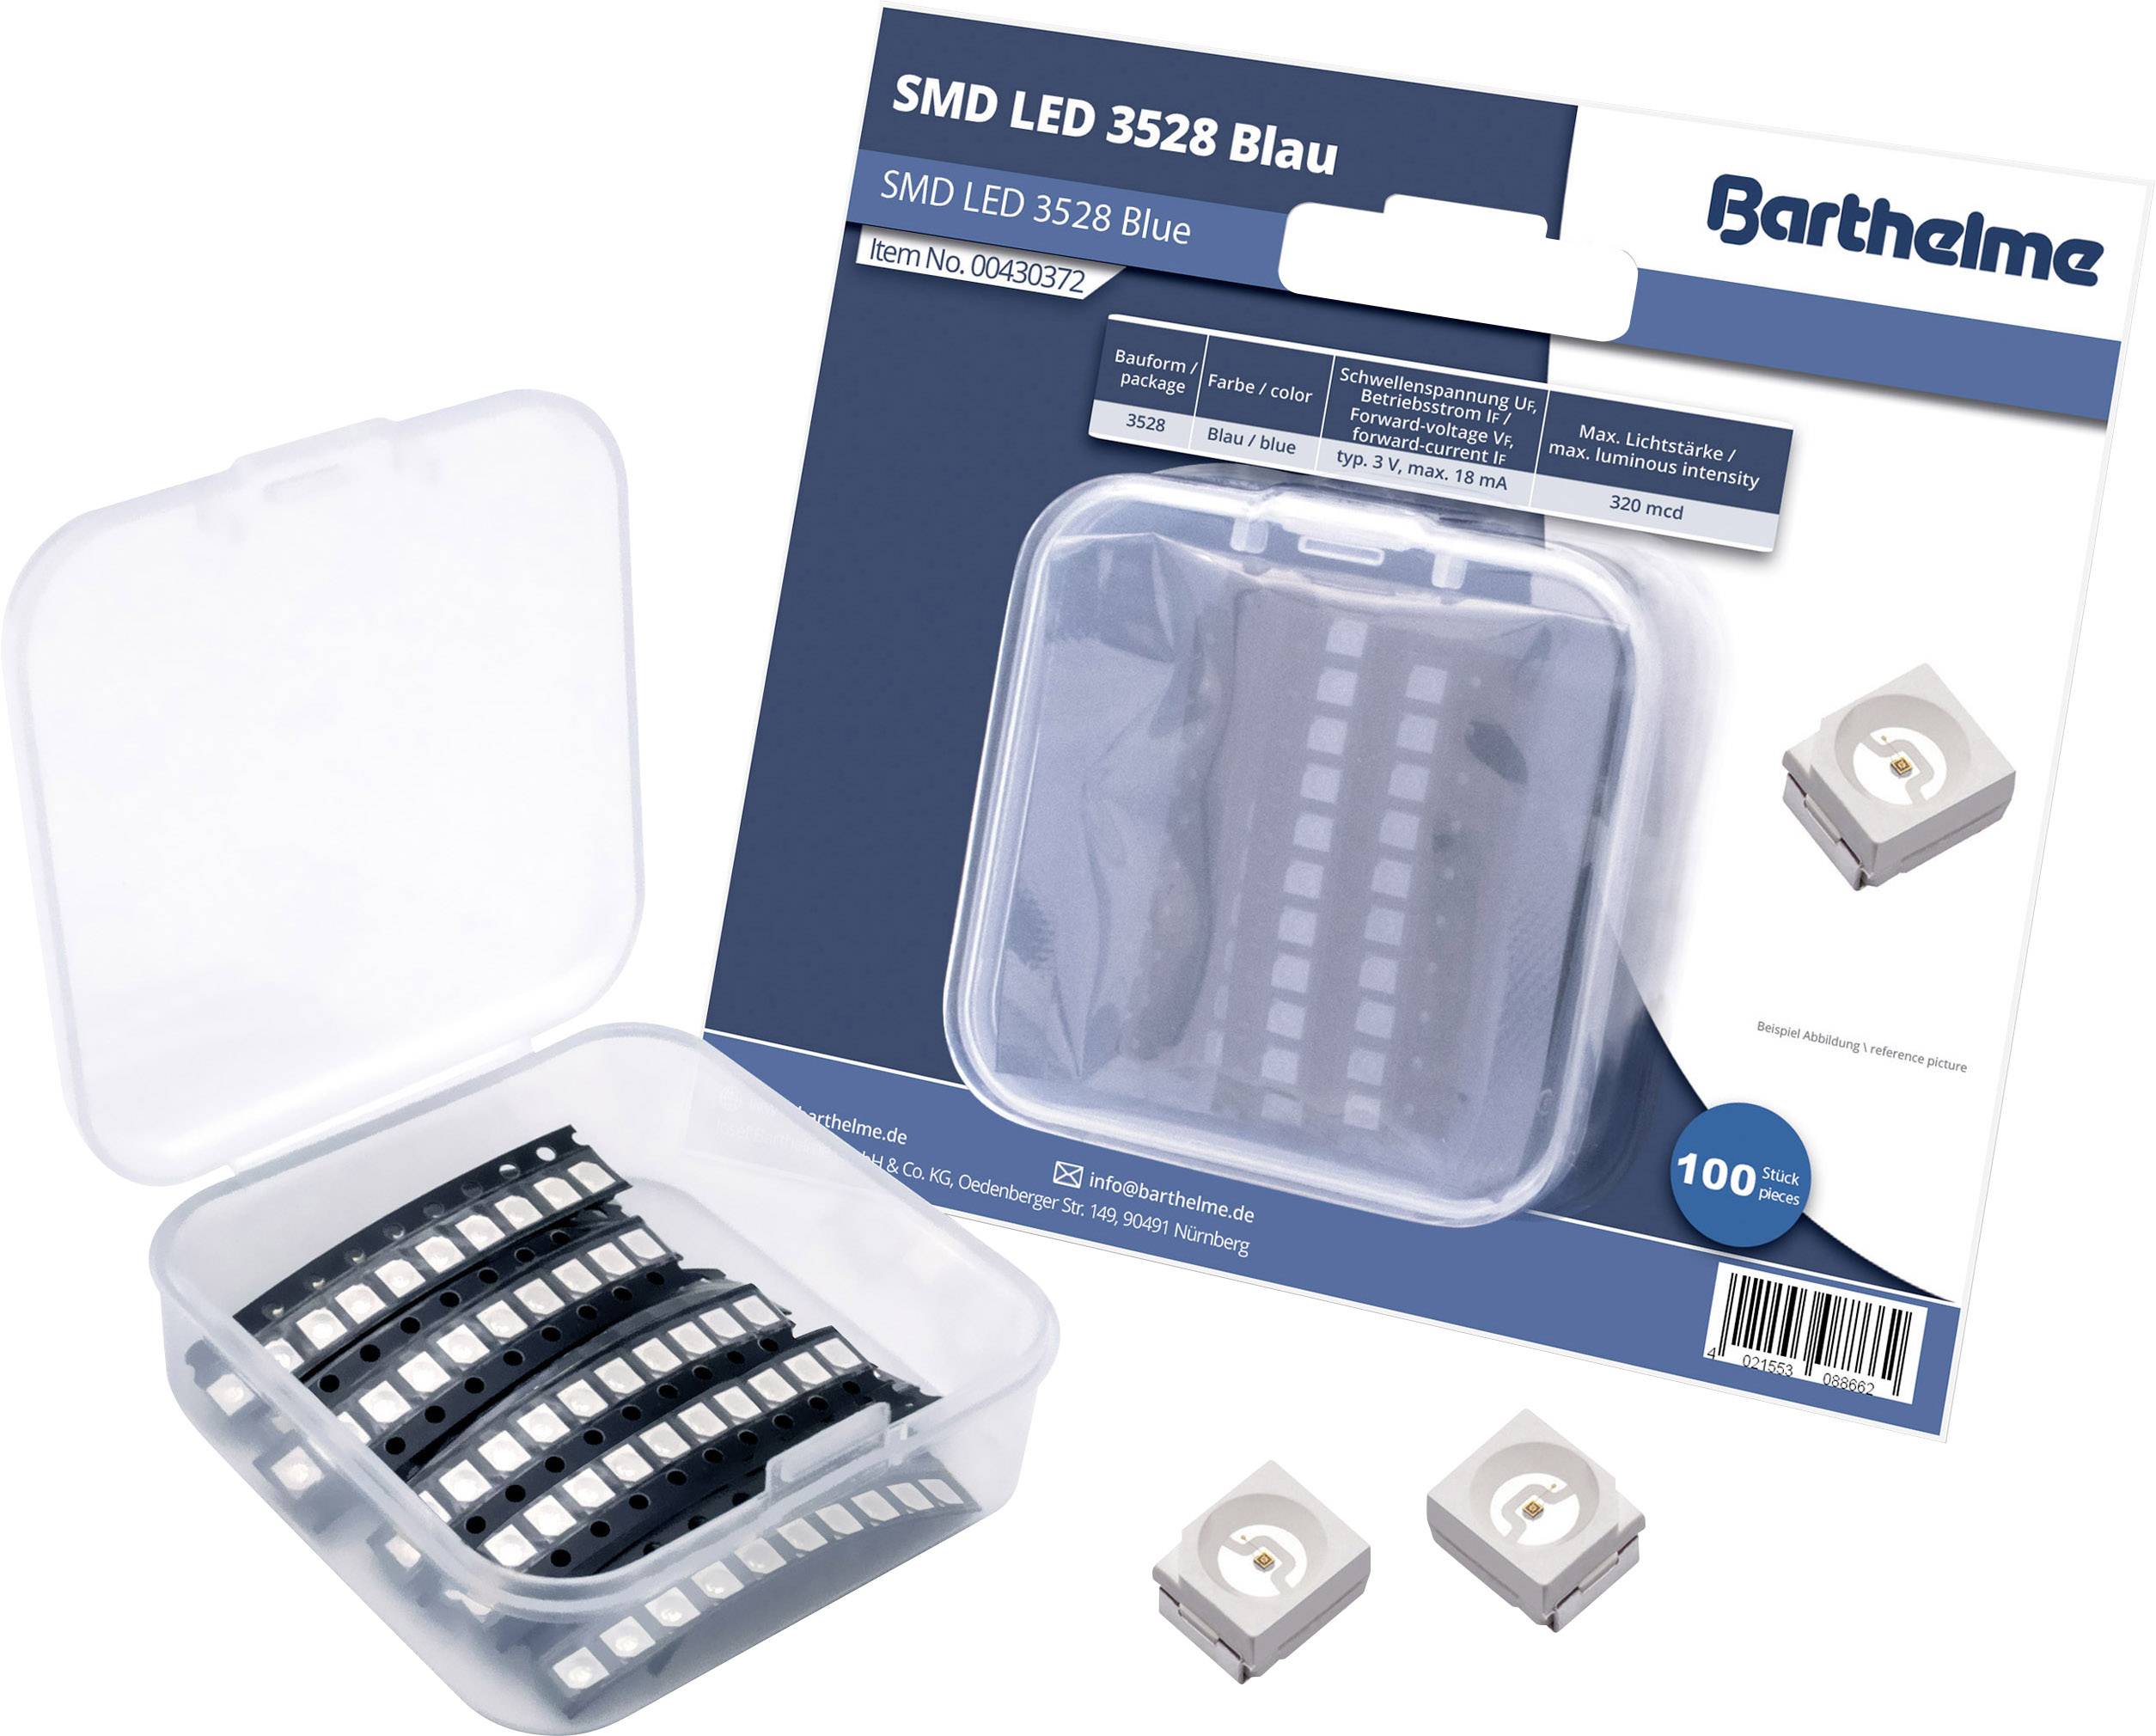 BARTHELME SMD-LED 3528 Blau 320 mcd 120 ° 18 mA 3 V Bulk